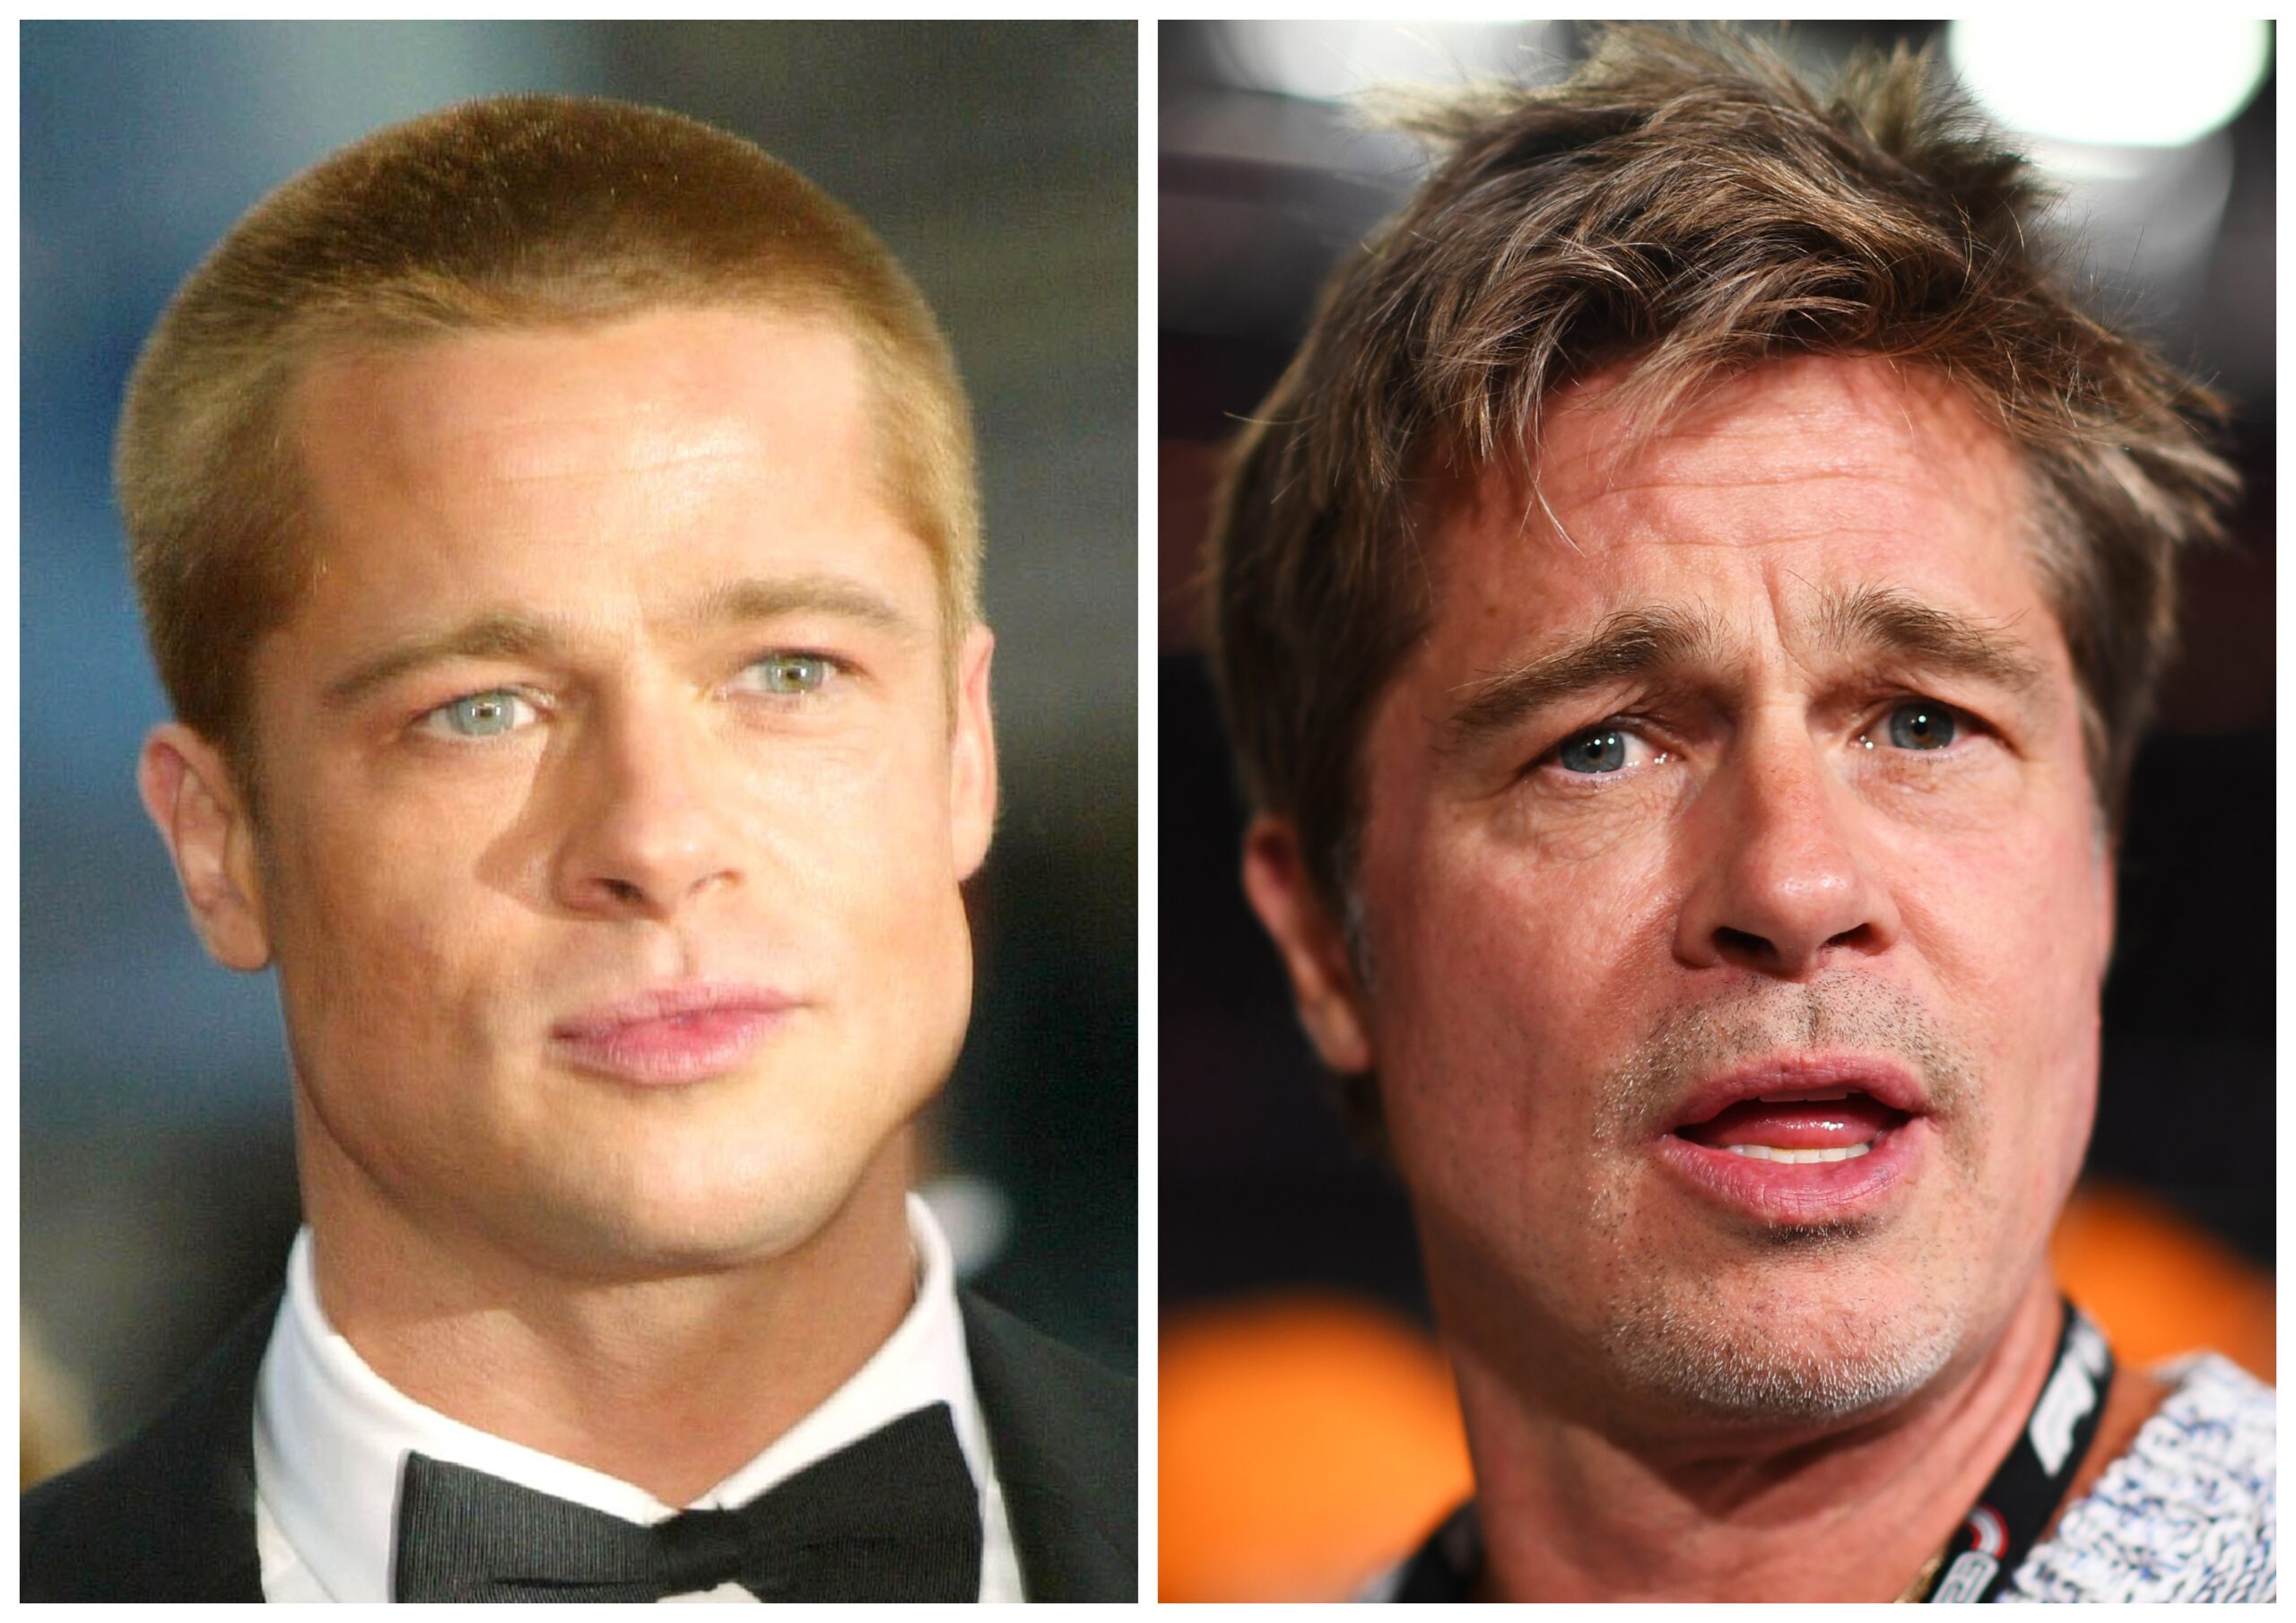 'Troy' cast member Brad Pitt